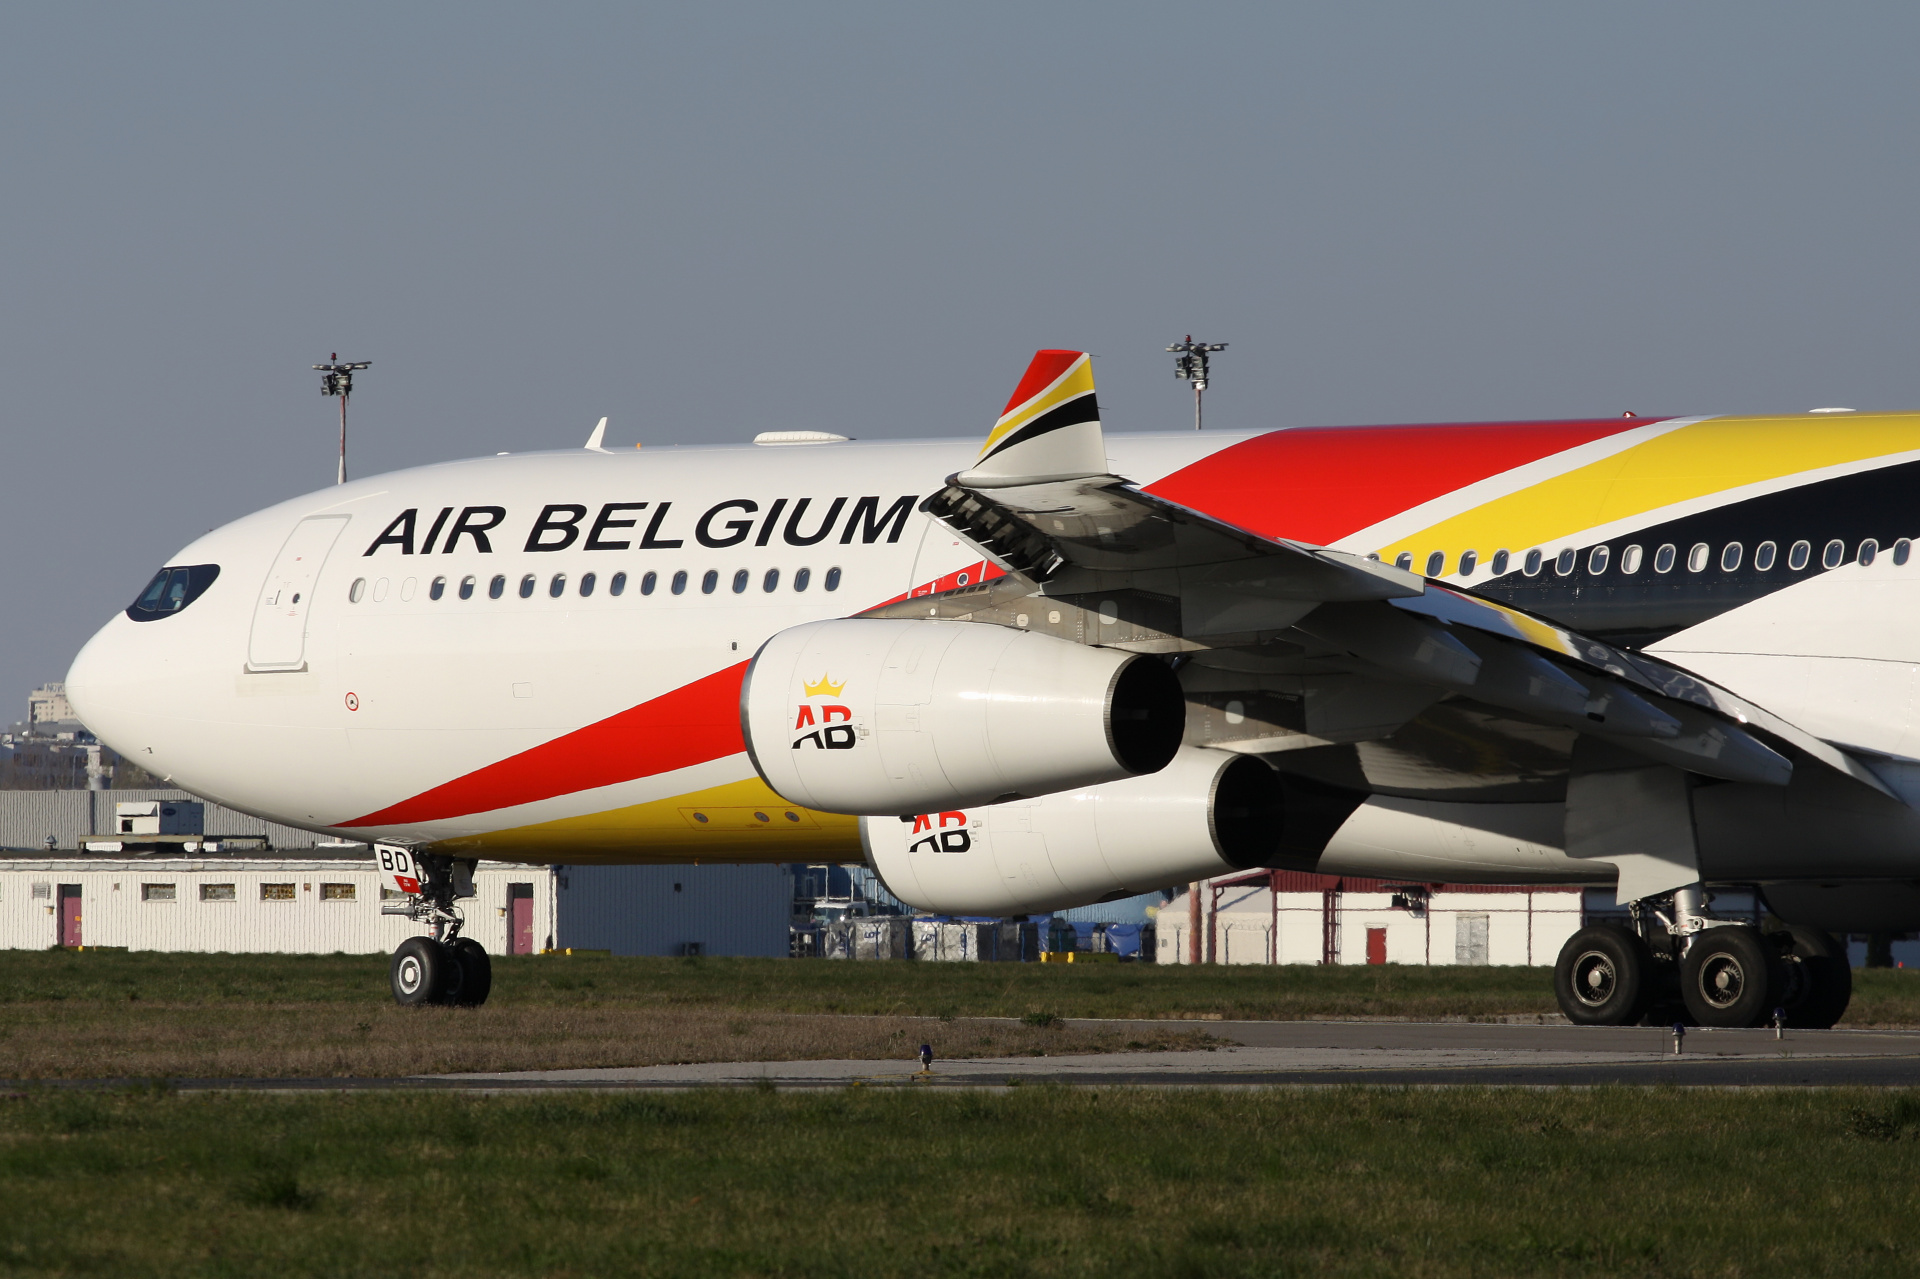 OO-ABD (Aircraft » EPWA Spotting » Airbus A340-300 » Air Belgium)